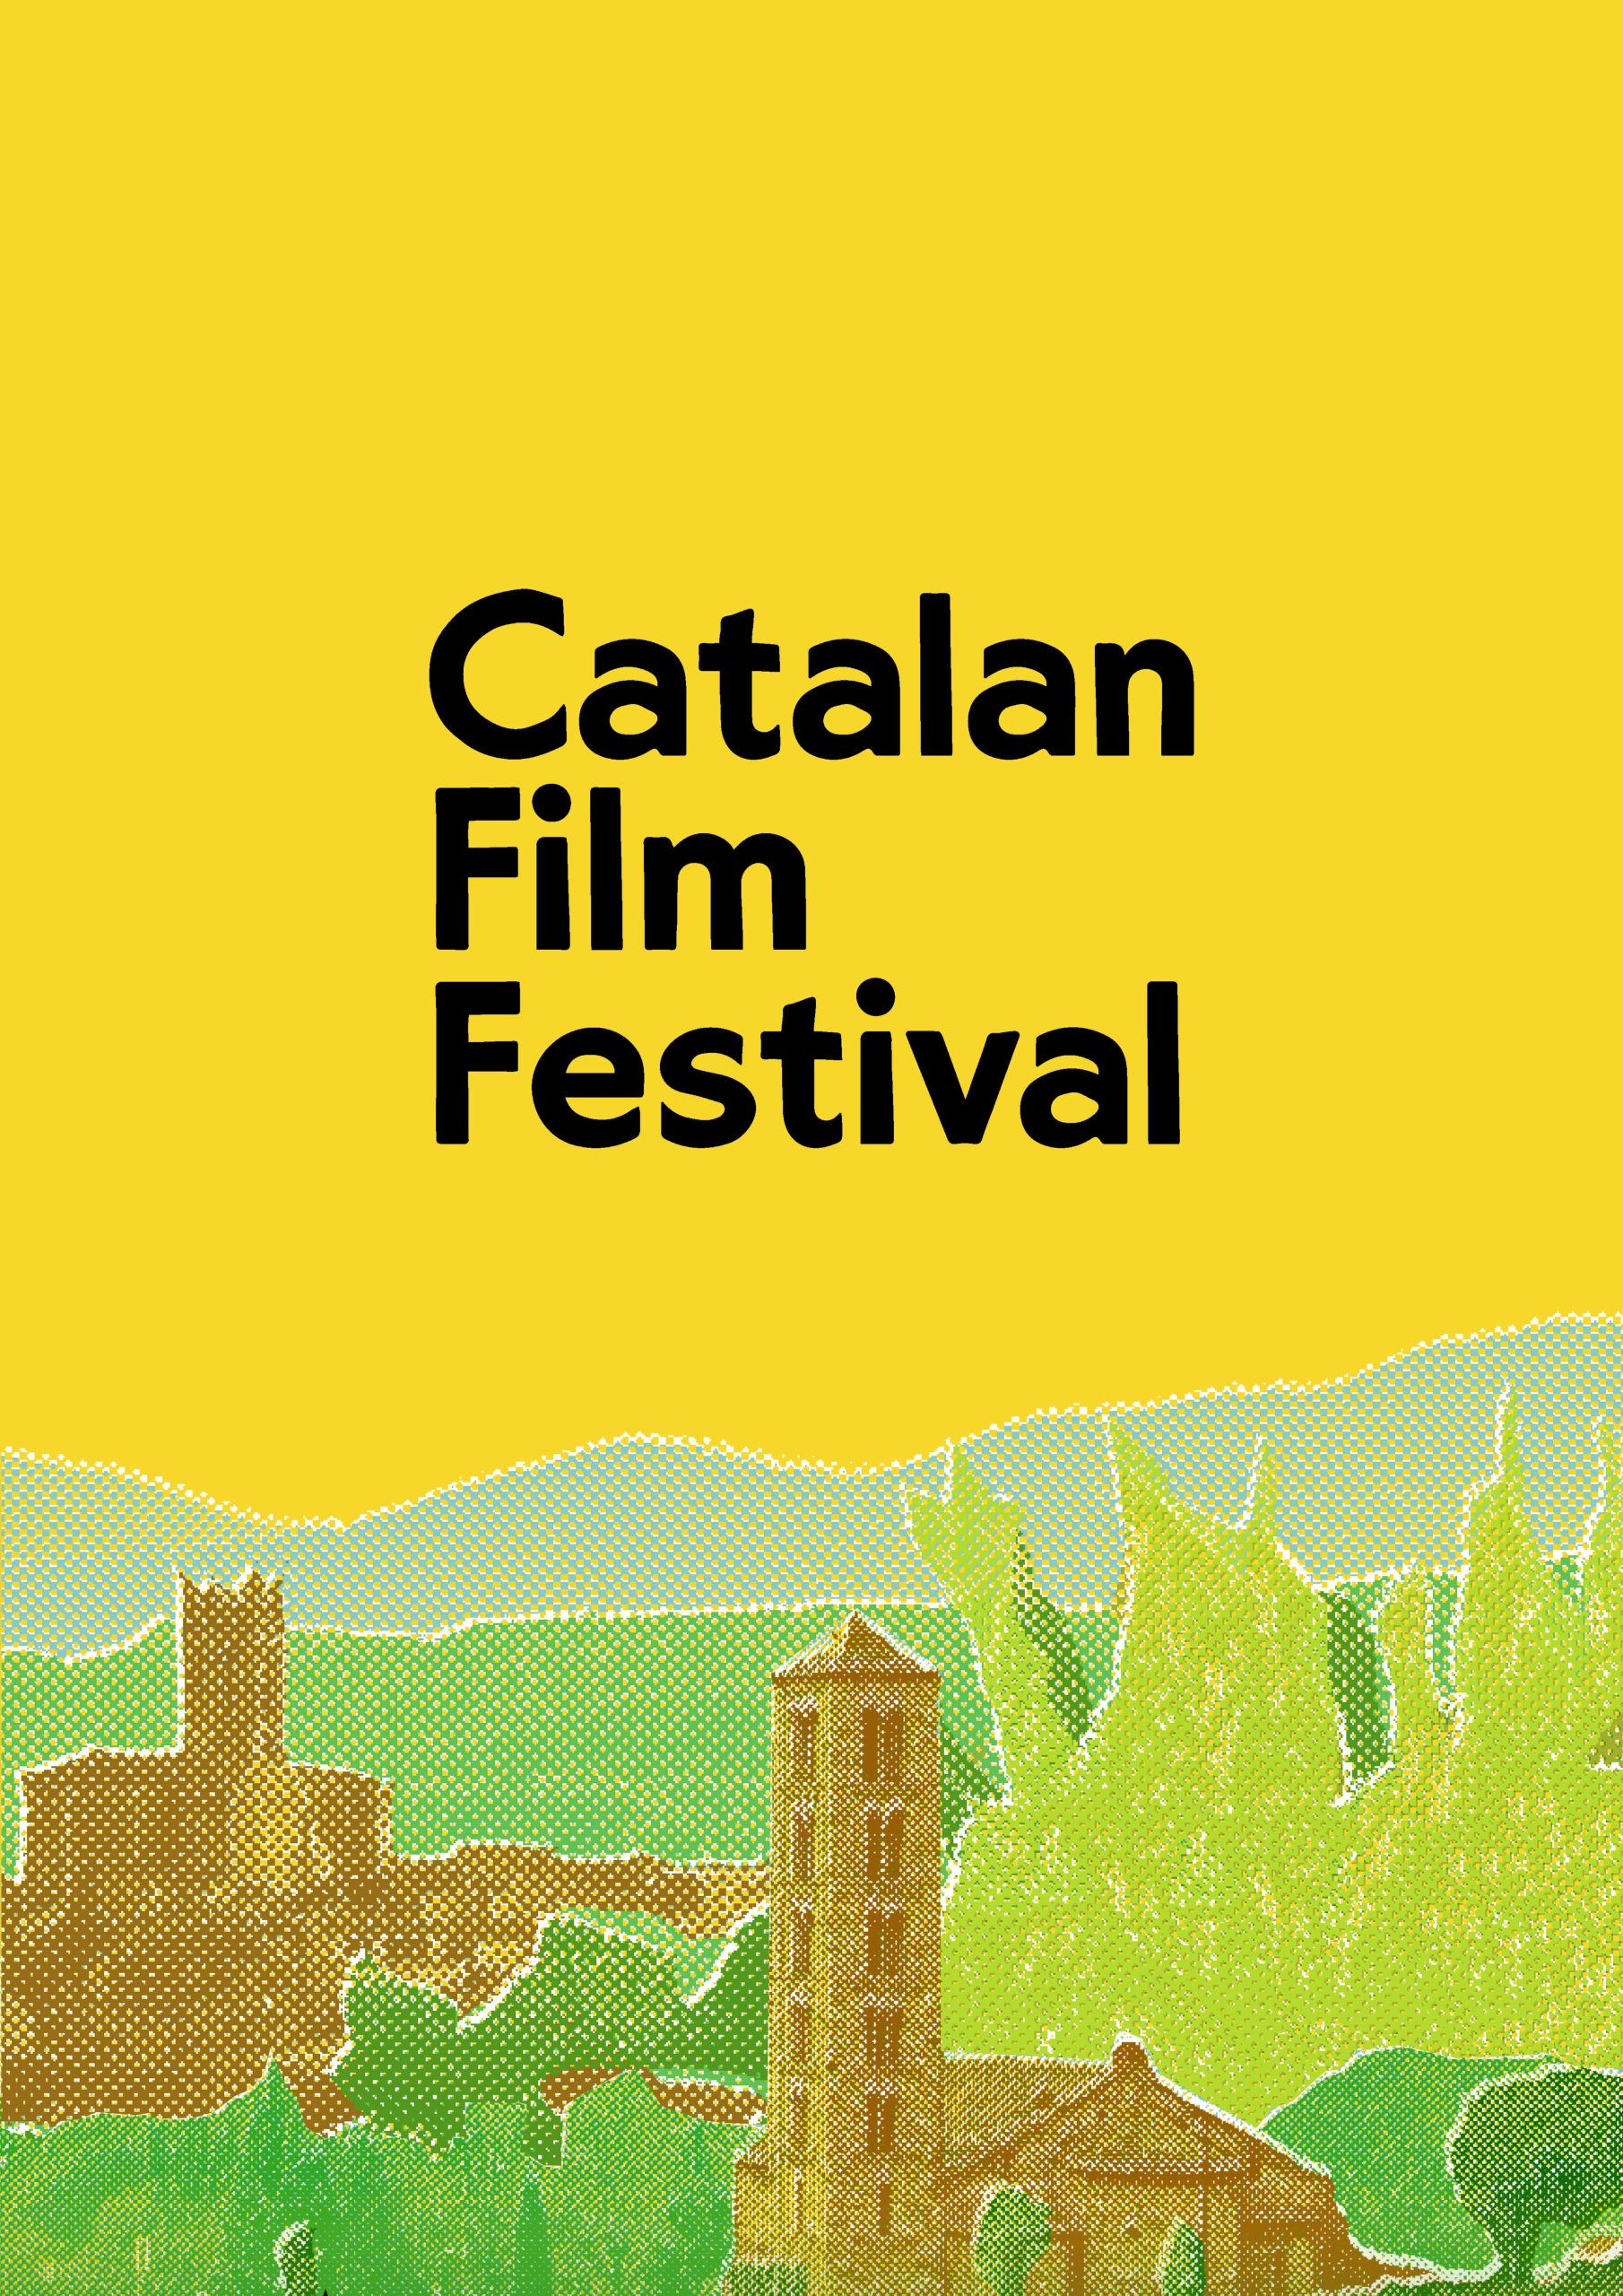 Catalan Film Festival